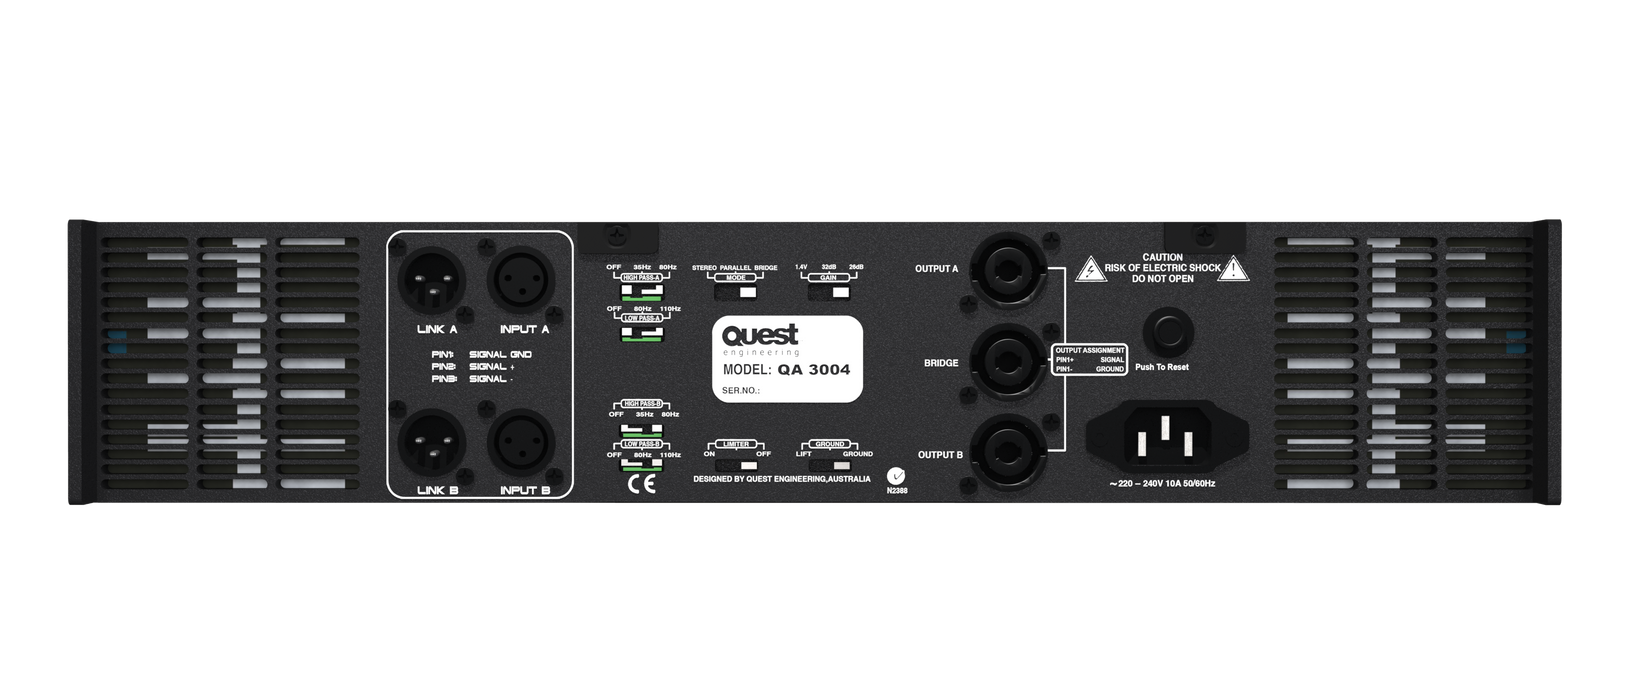 Quest - QA4004 - 2 Channel Amplifier